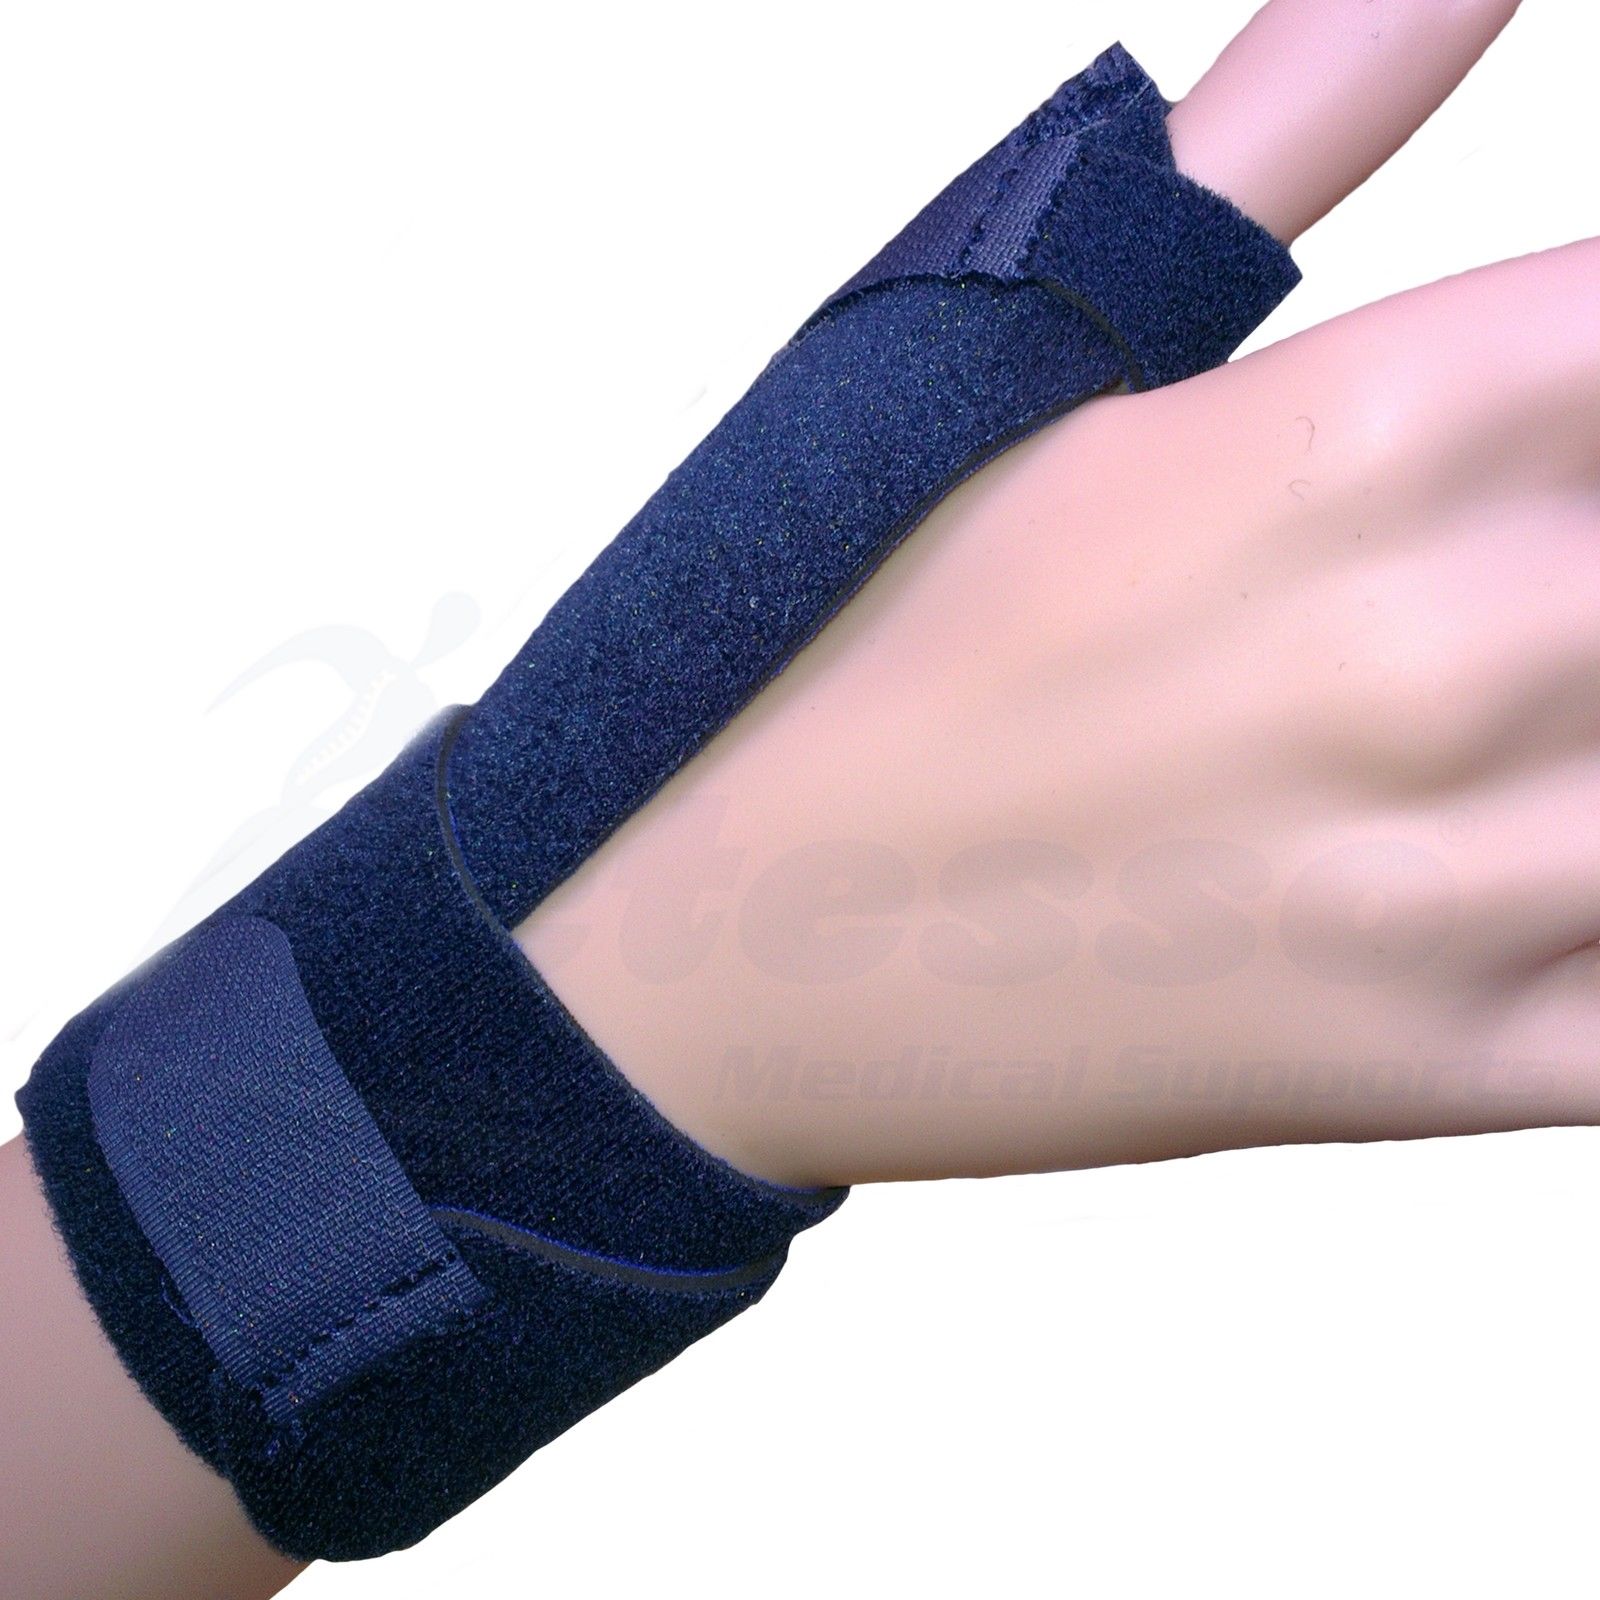 Blue Neoprene Medical Thumb Spica Wrist Support Splint Brace Hand Strain Sprain Ebay